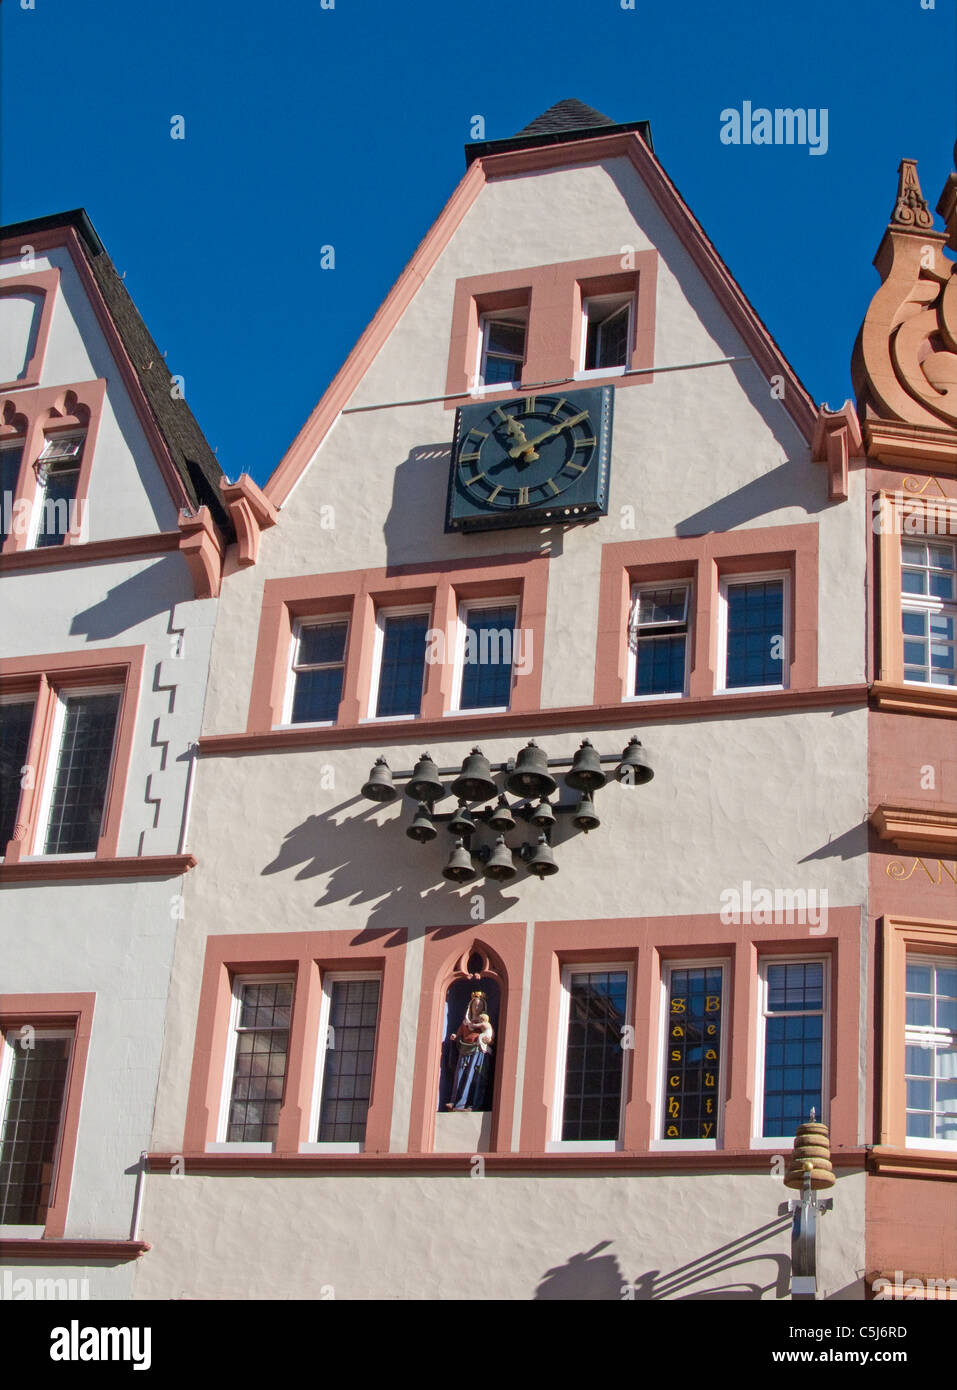 Glockenspiel an Hausfassade, Hauptmarkt von Trier, Carrilon, orchestra bells at a house facade, main market Stock Photo